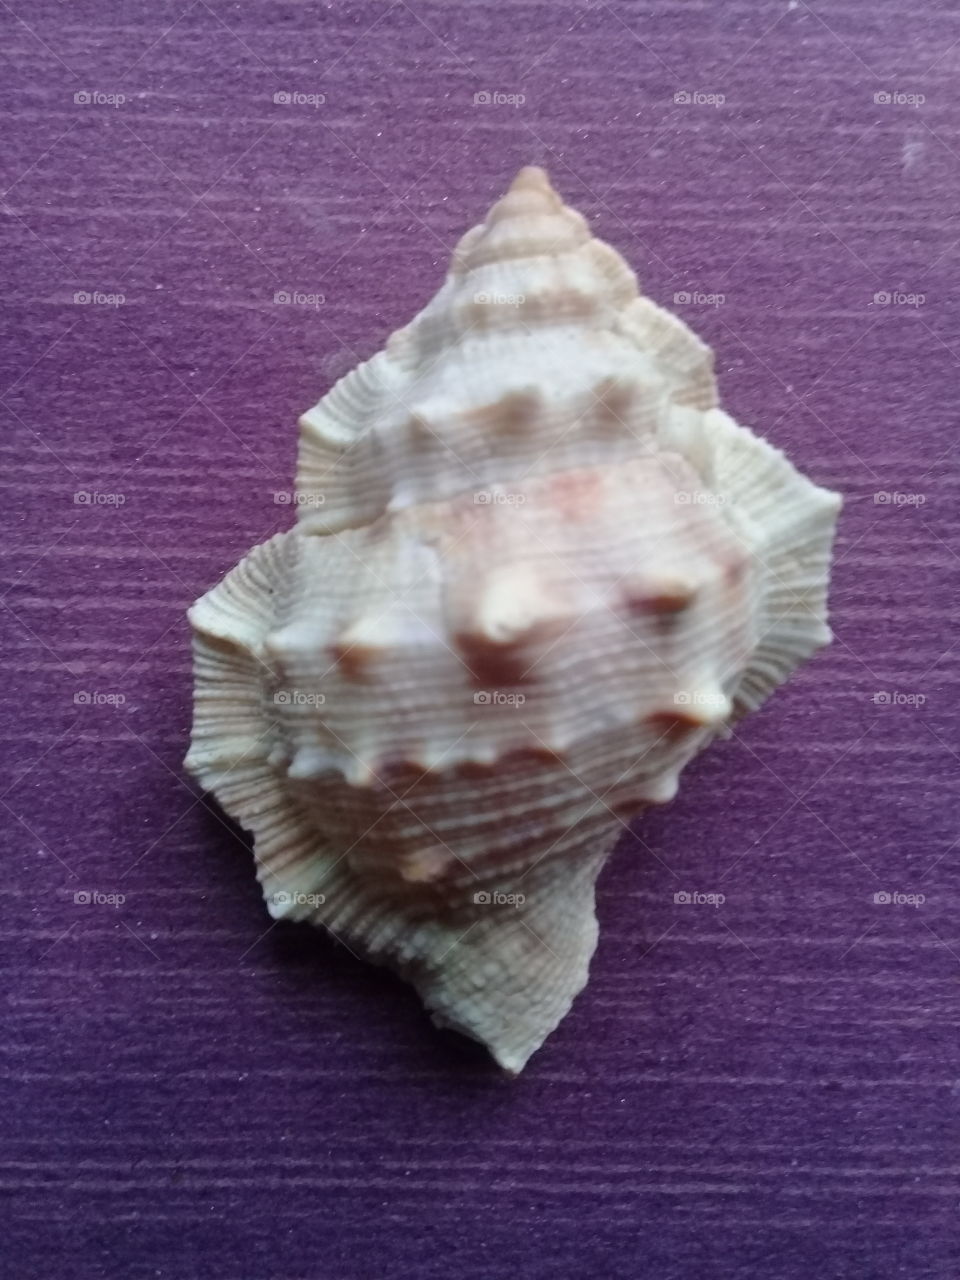 a chank shell